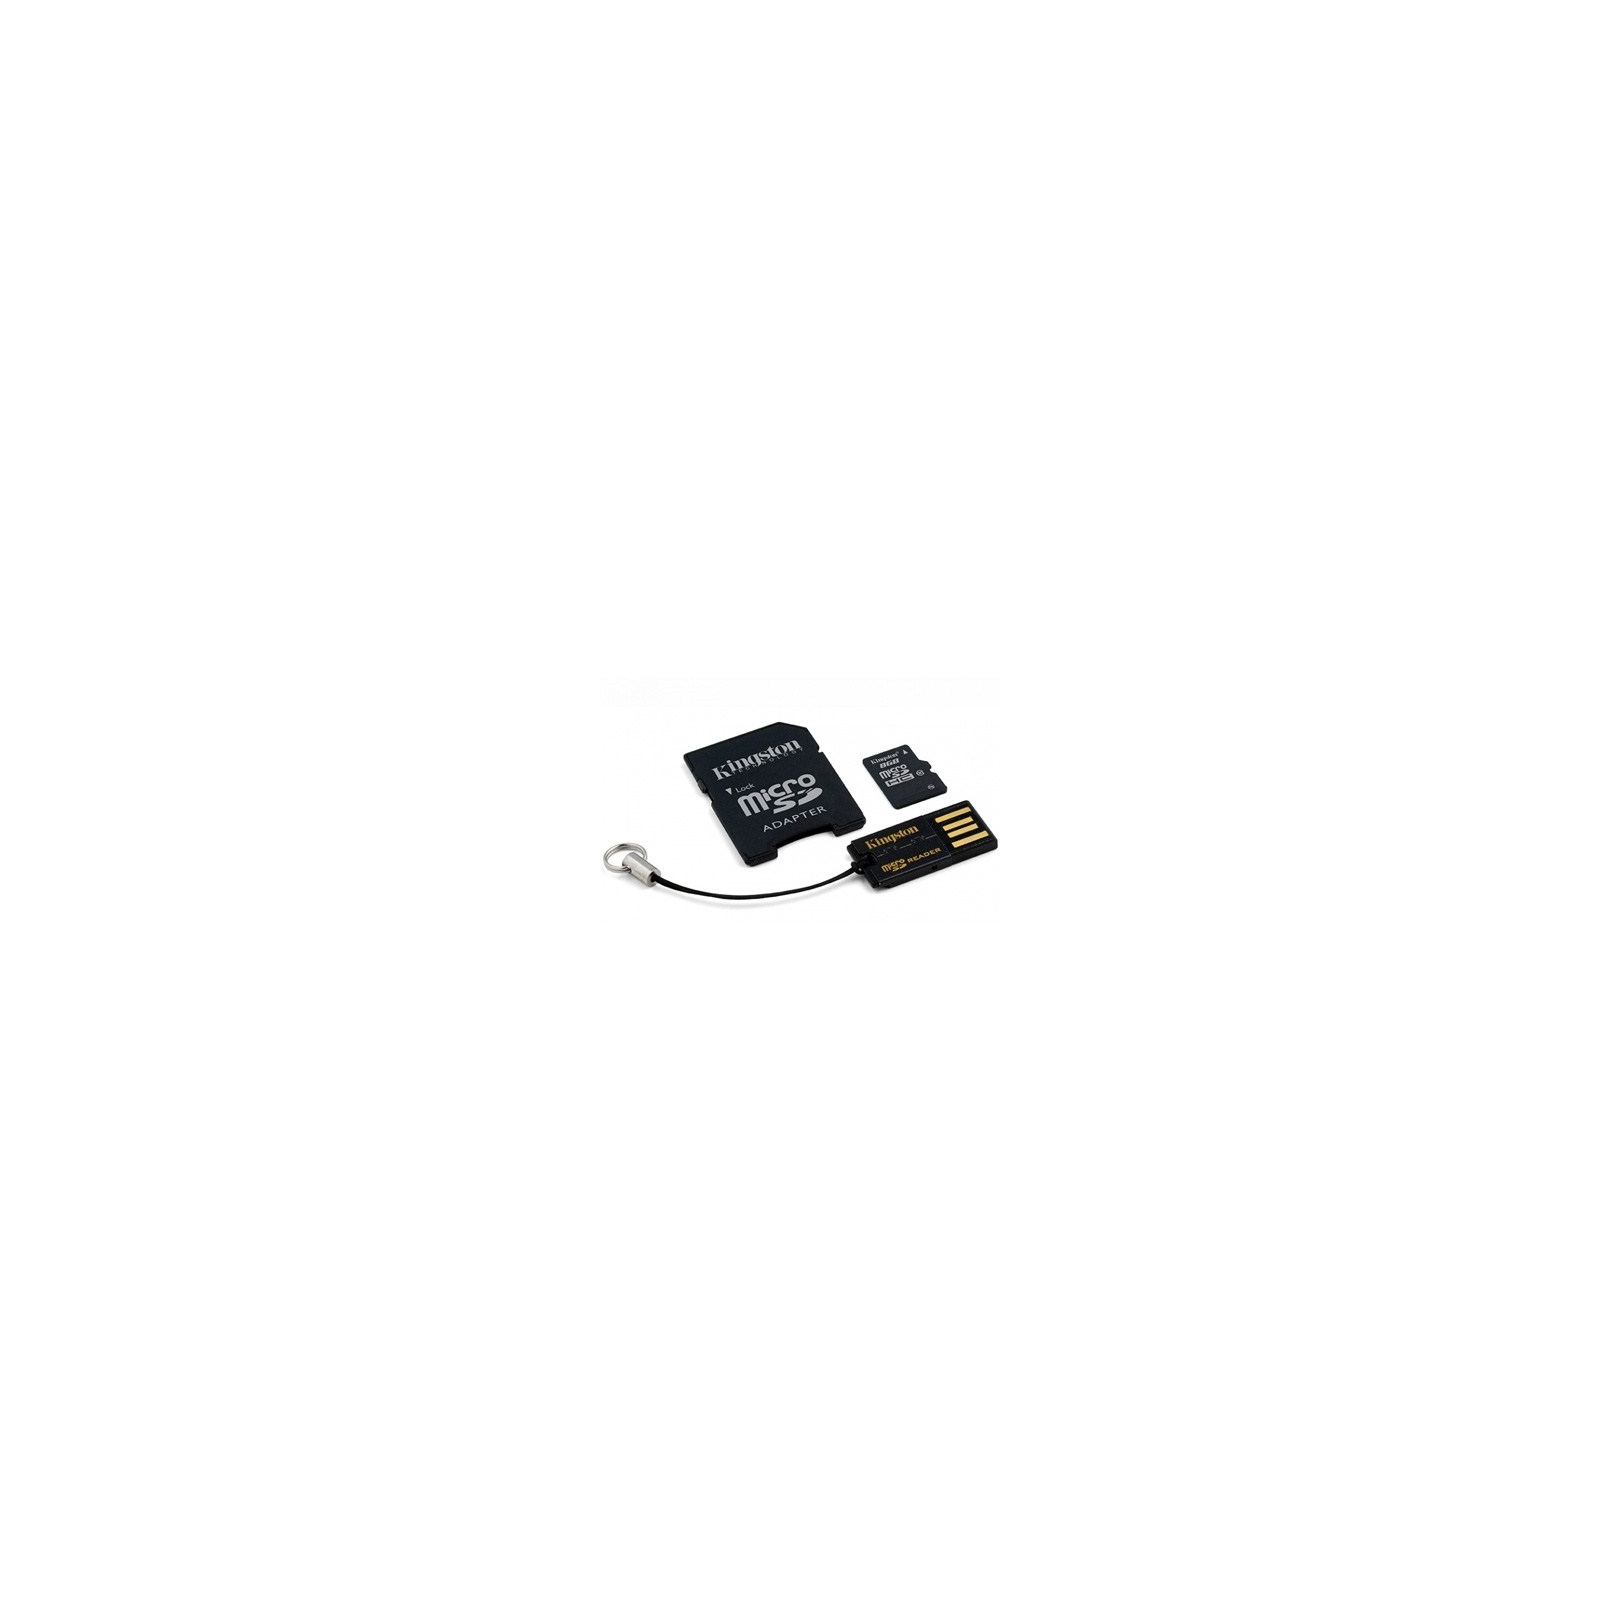 Карта пам'яті Kingston 8Gb microSDHC class 10 Gen 2 + SD-adapter + USB-reader (MBLY10G2/8GB)